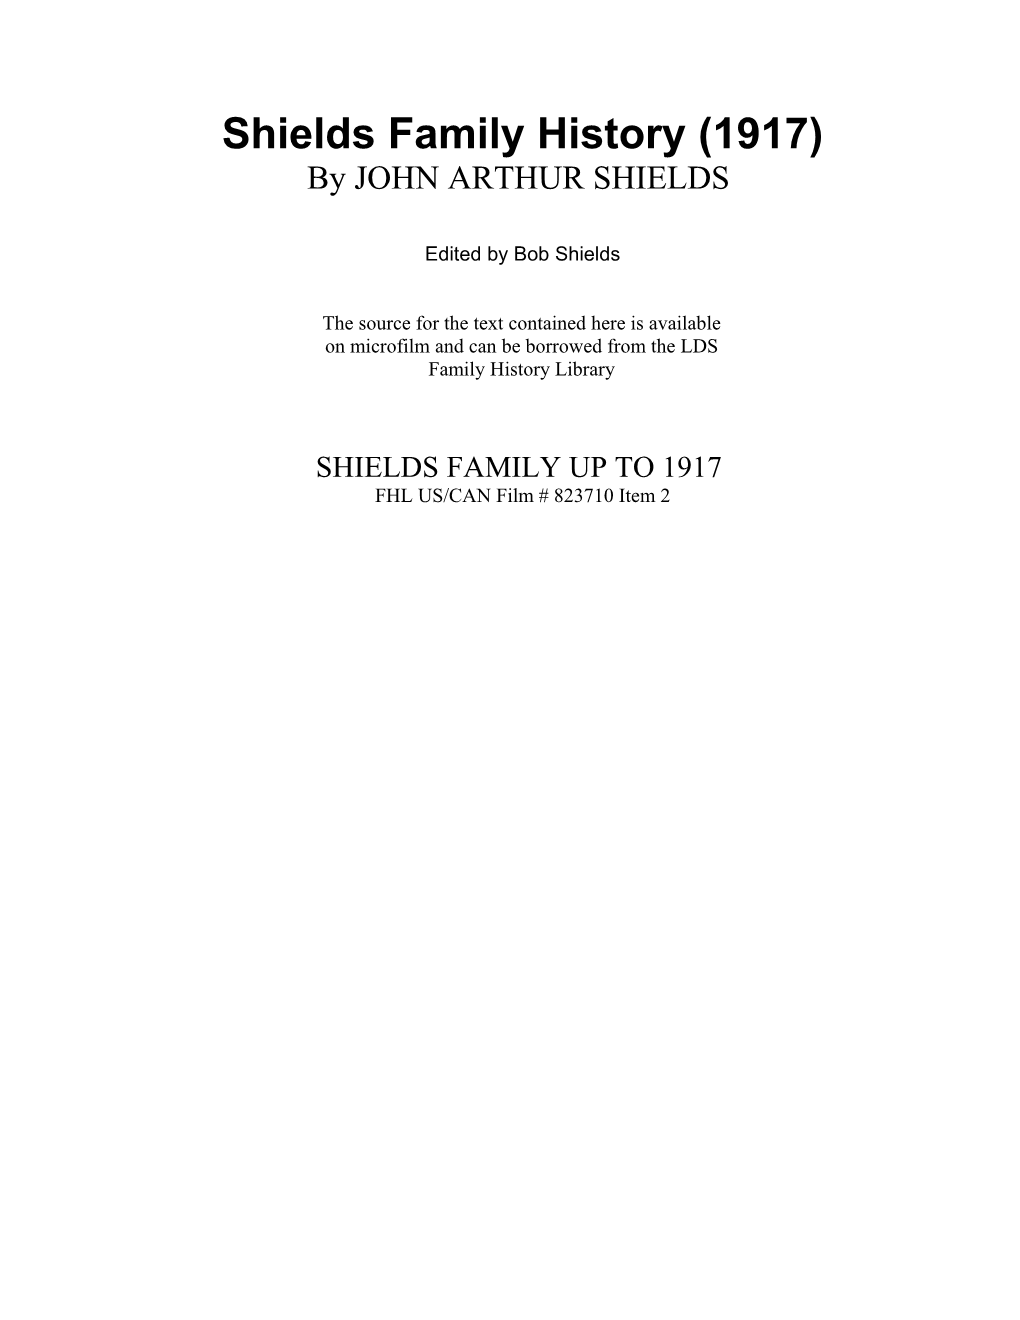 Shields Family History to 1917